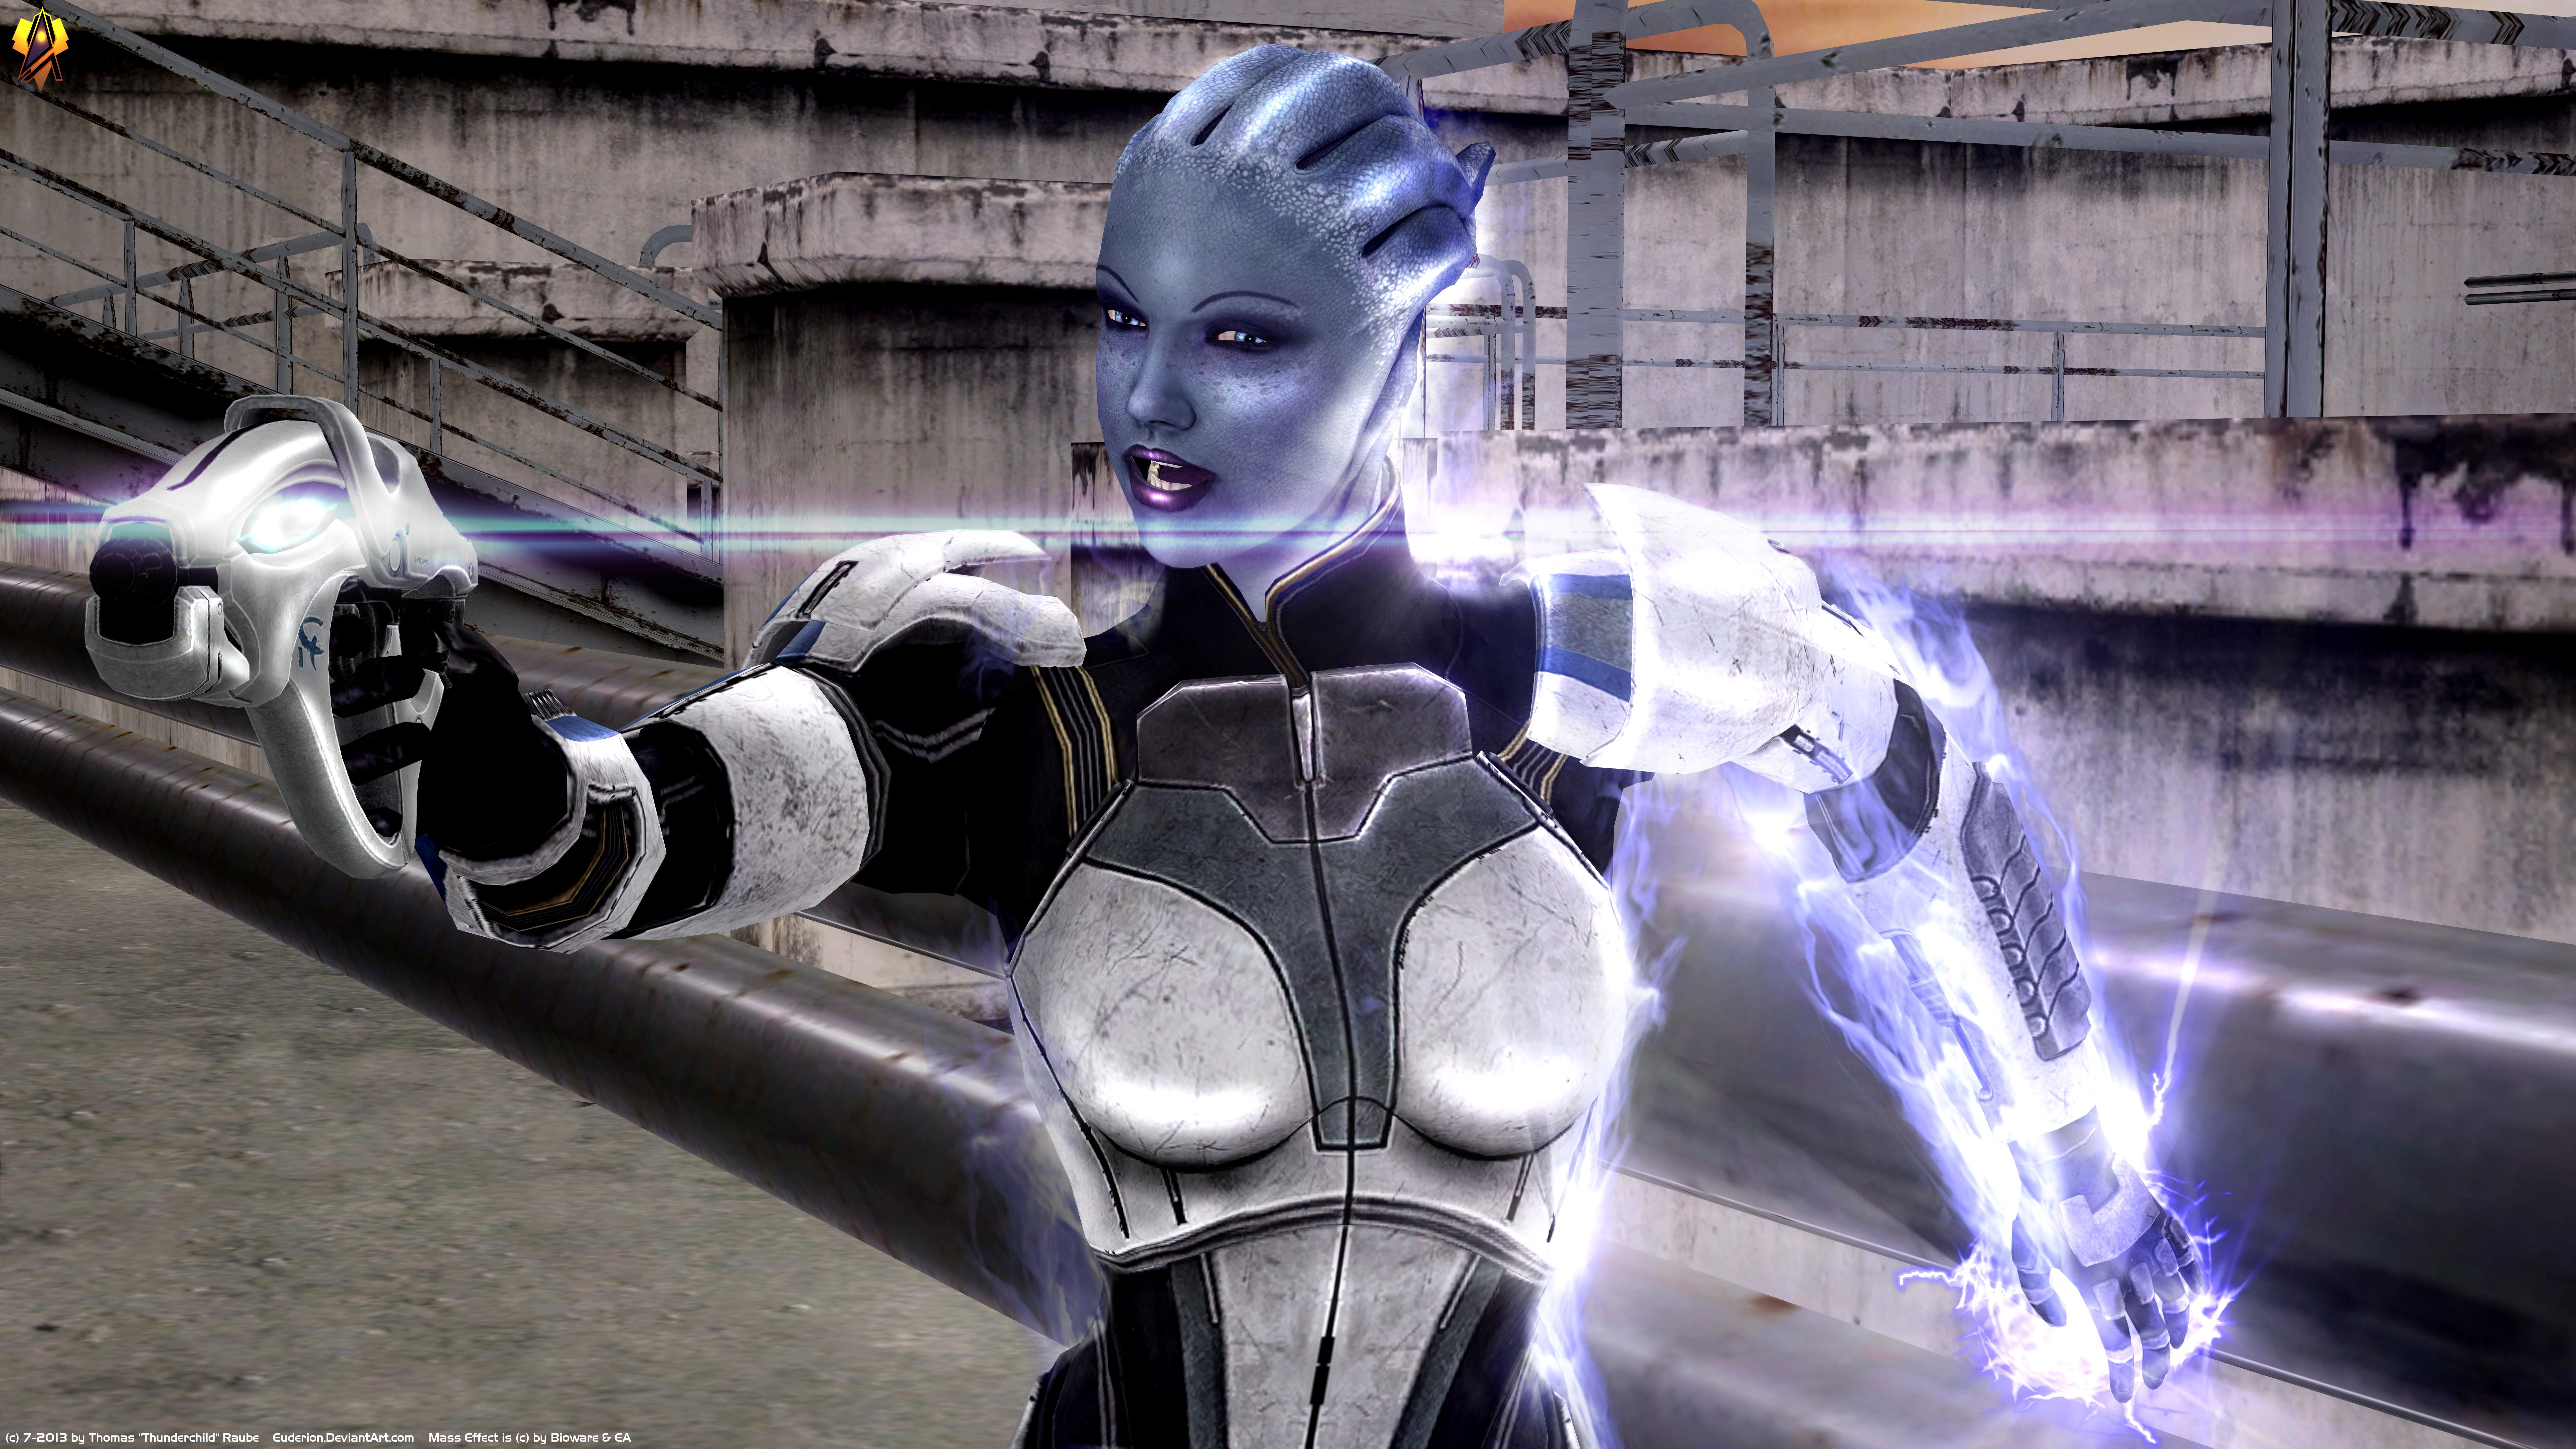 Descarga gratuita de fondo de pantalla para móvil de Biótico, Liara T'soni, Mass Effect, Extraterrestre, Videojuego, Ciencia Ficción.